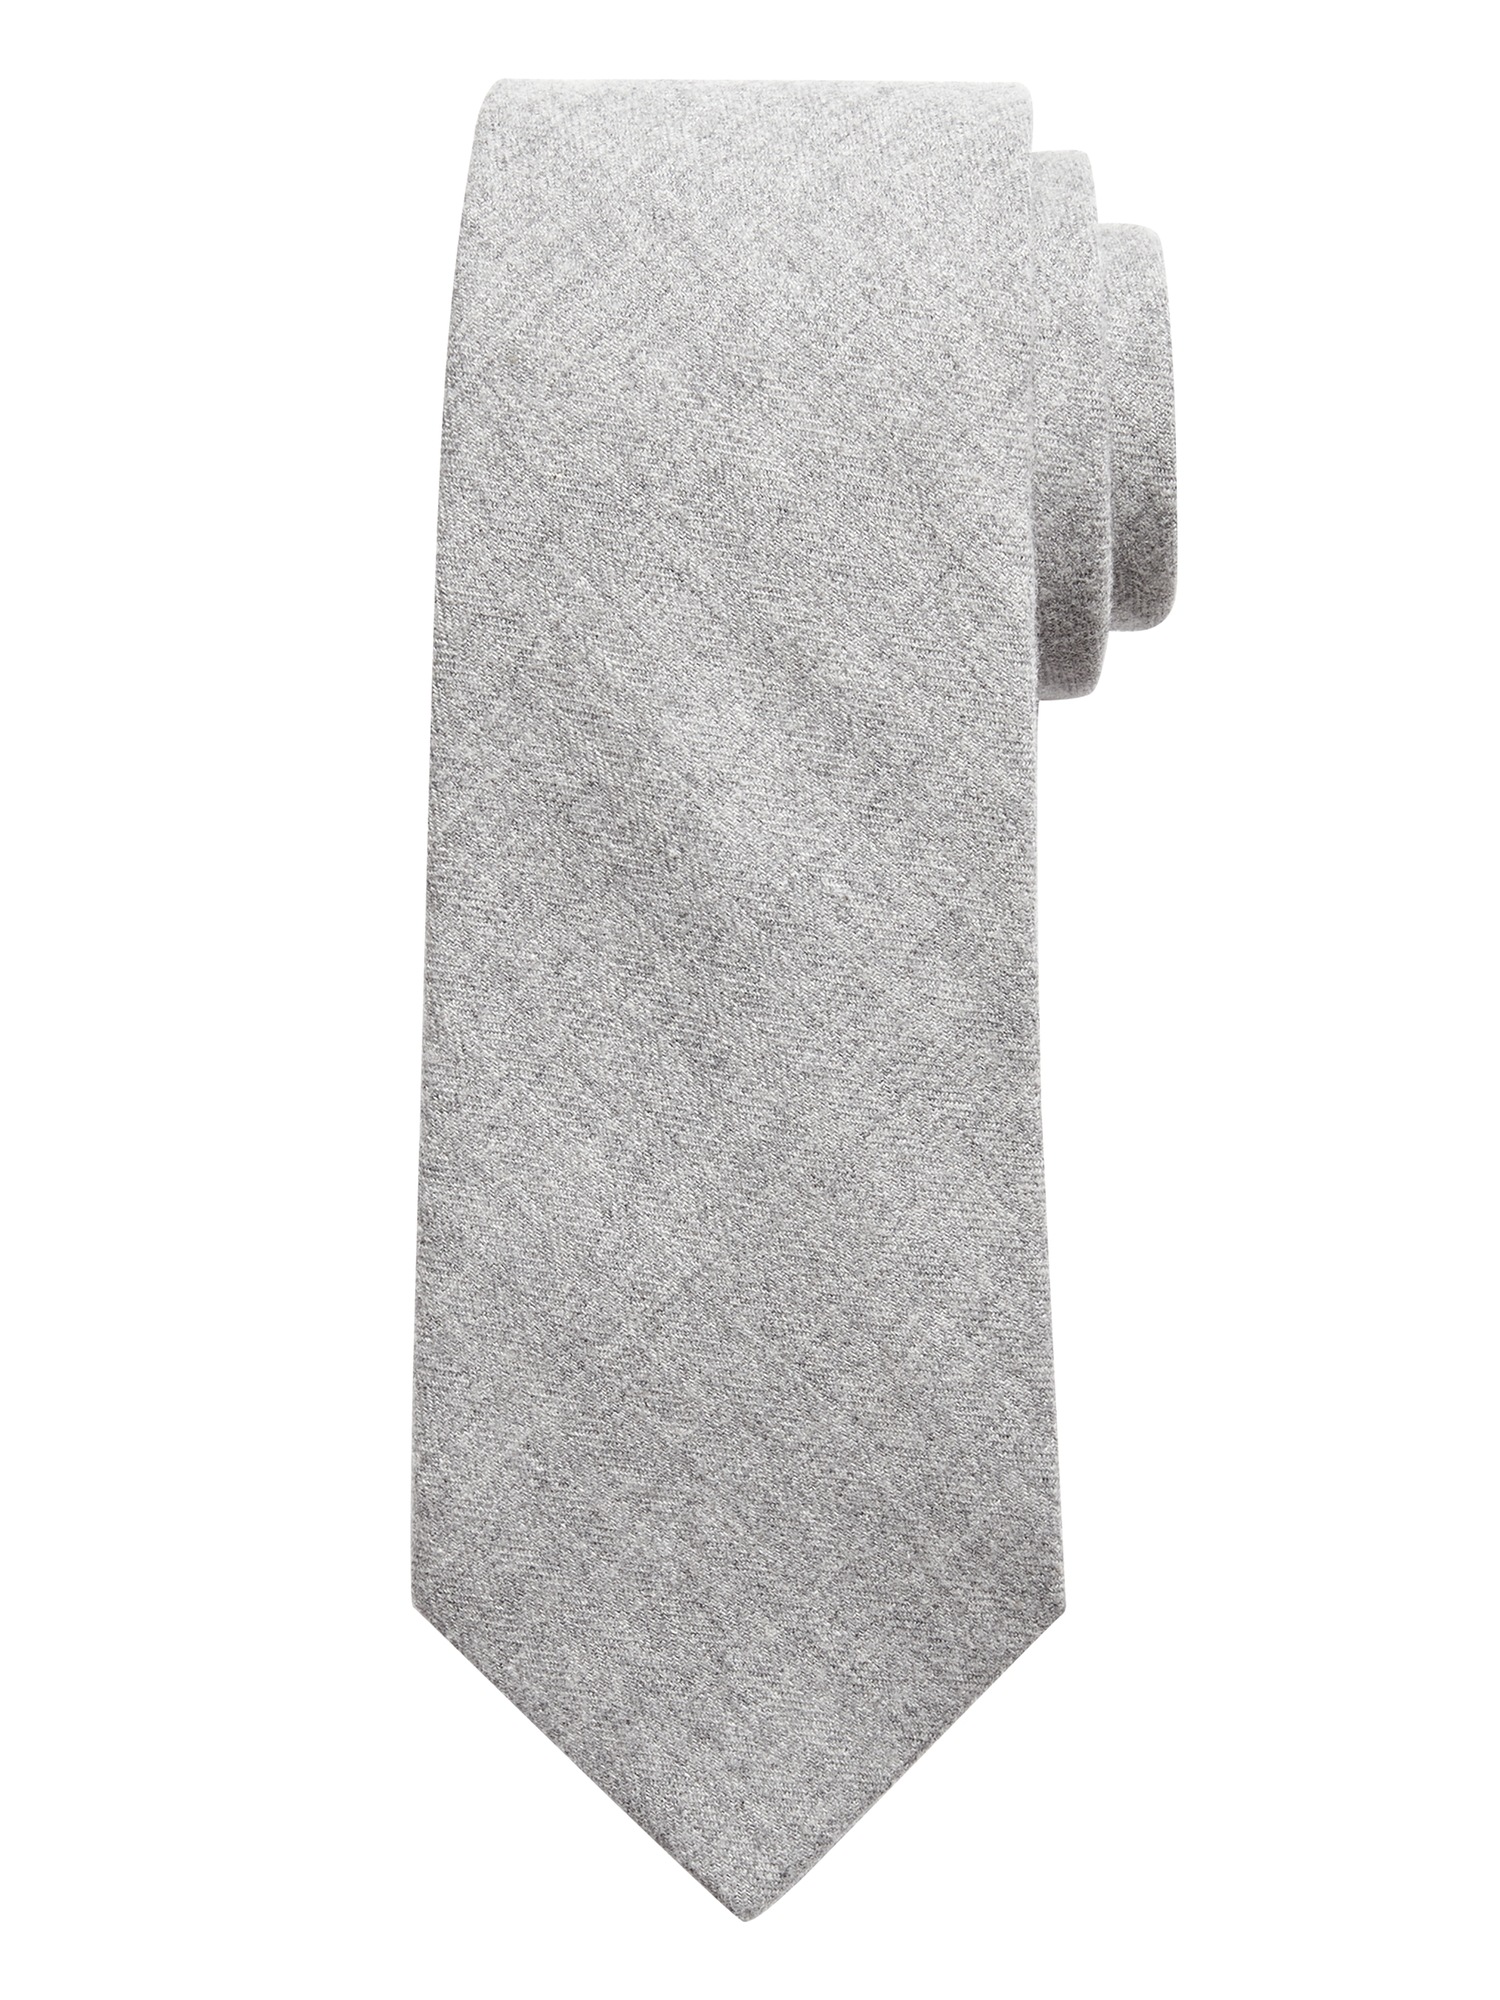 Flannel Tie